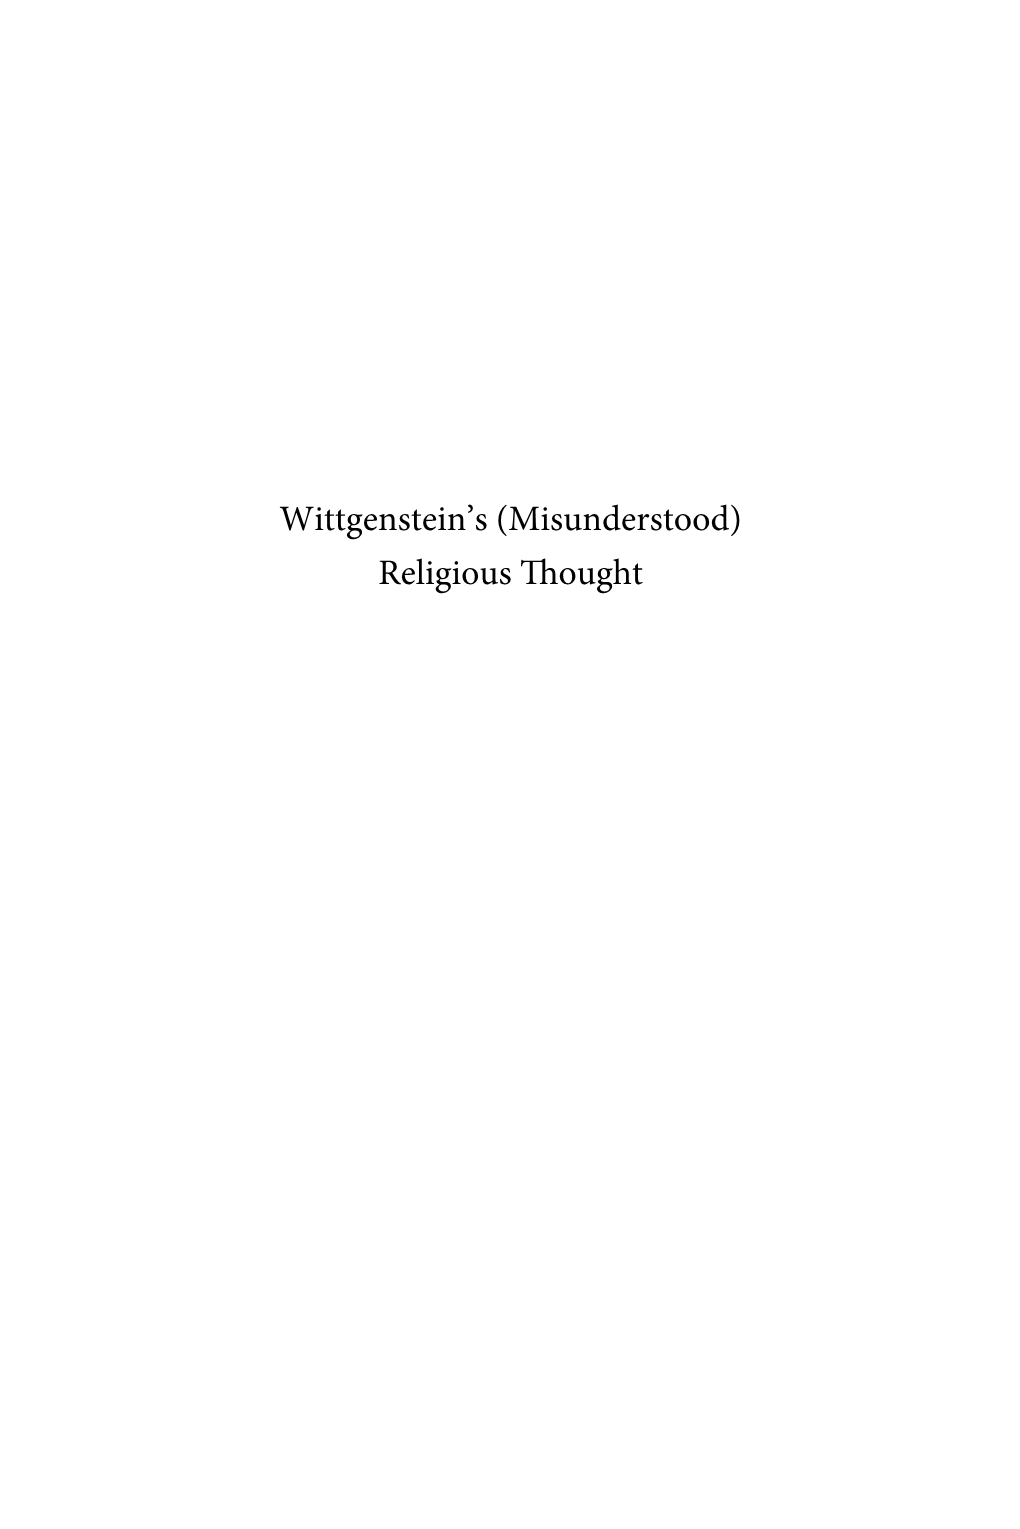 Wittgenstein's (Misunderstood) Religious Thought